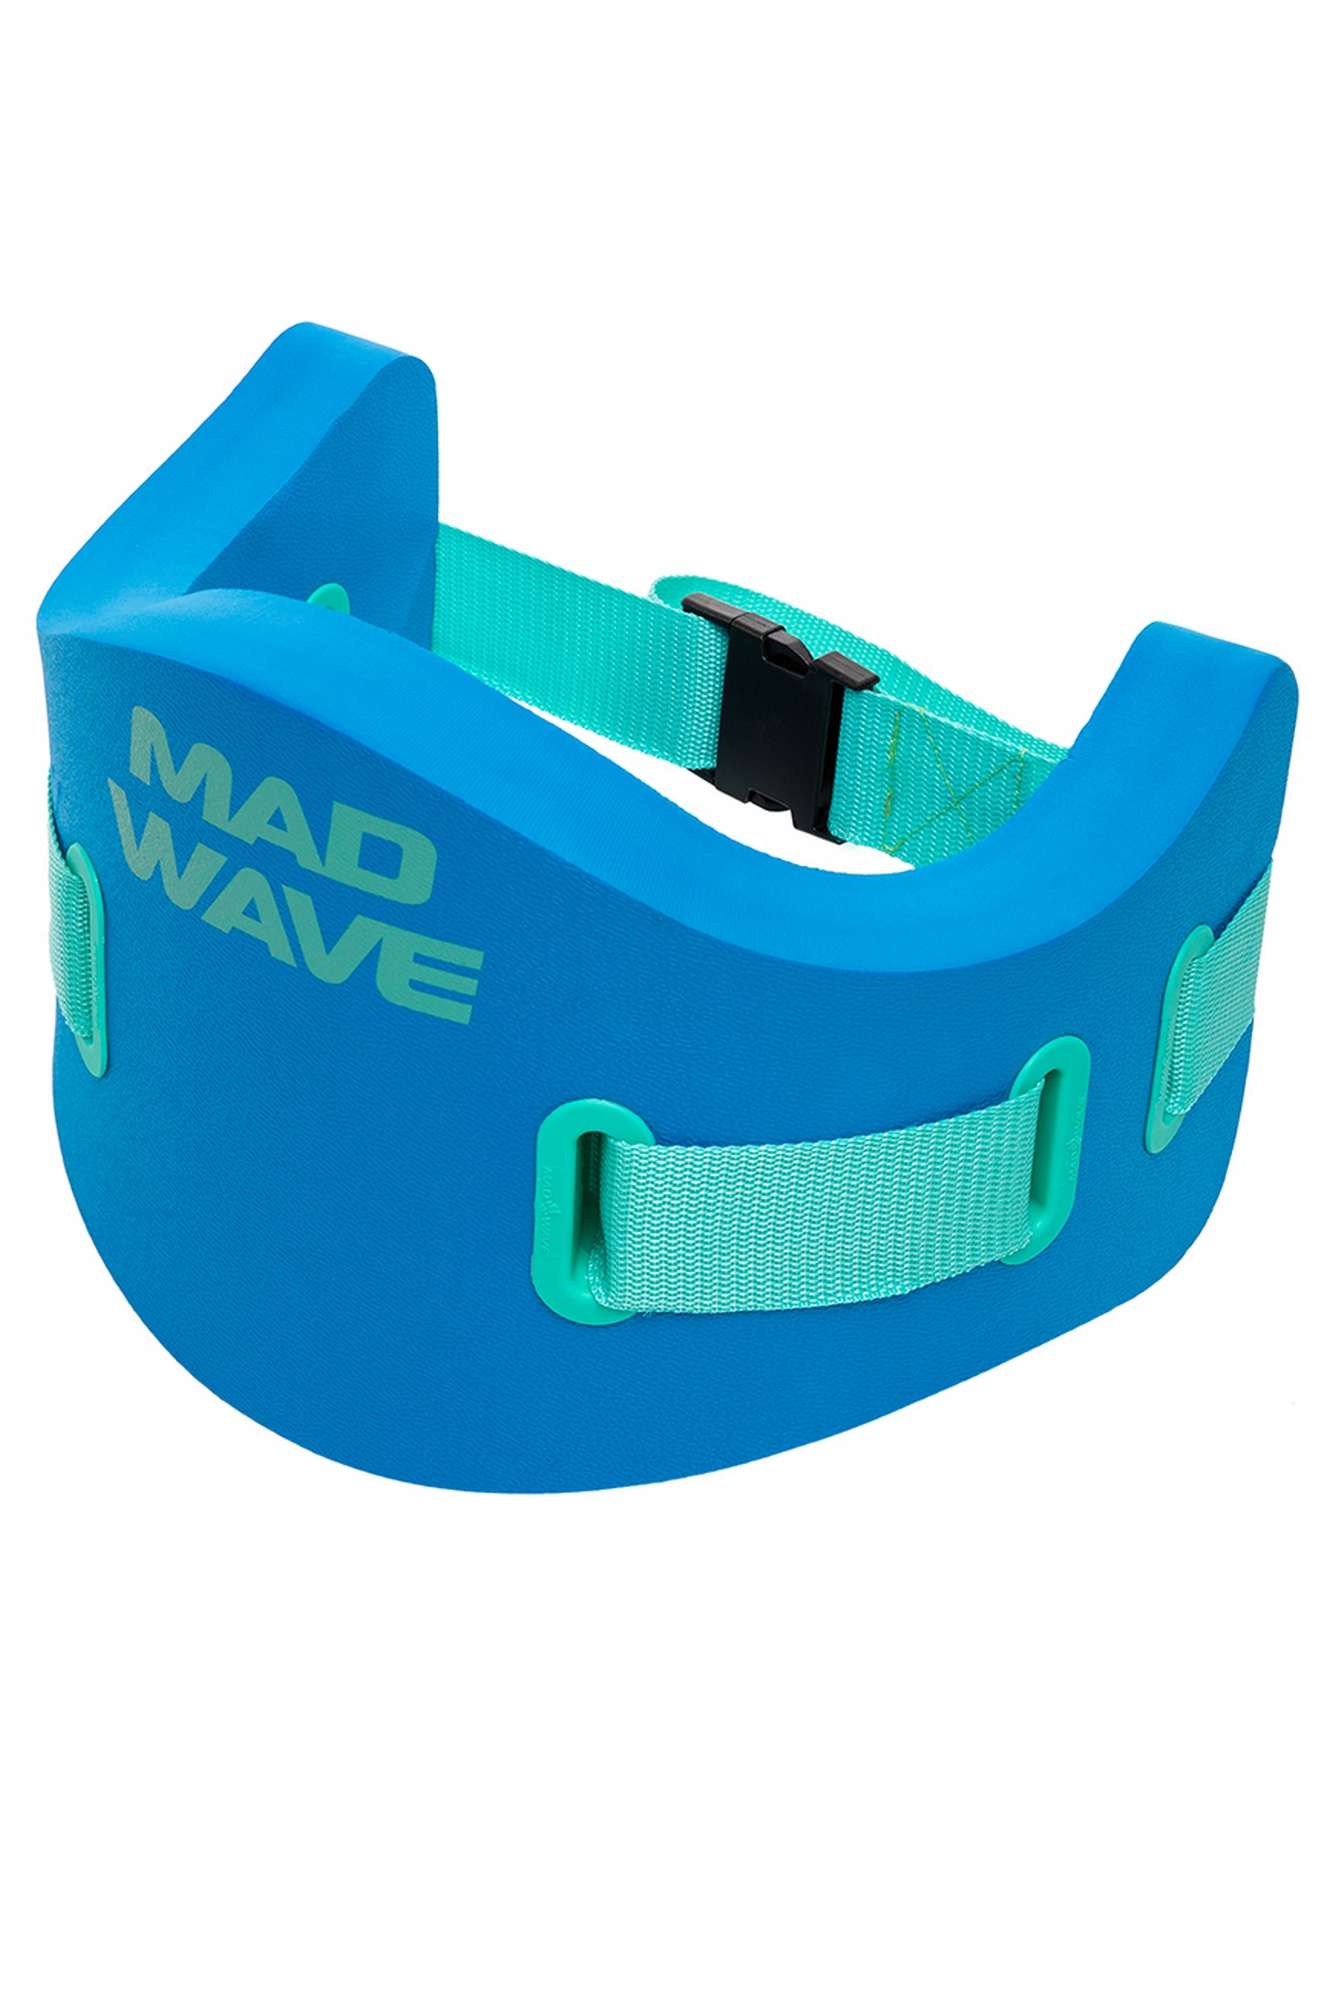 Пояс для плавания Mad Wave Aquabelt M0823 02 7 08W размер XL 1333_2000